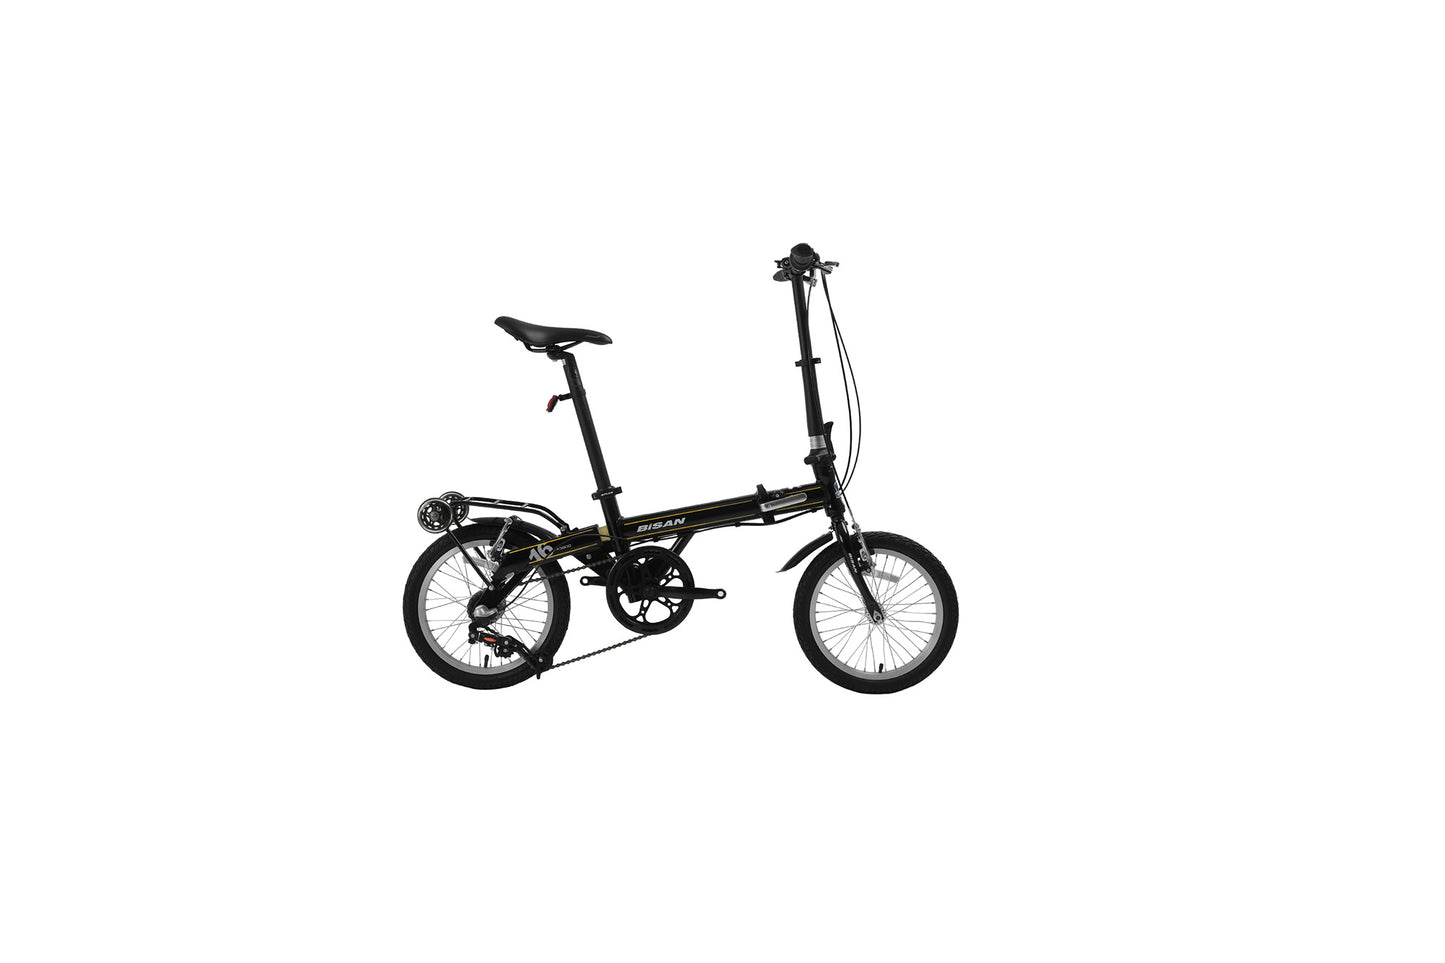 Bisan FX 3800 - Rollable Folding Bike